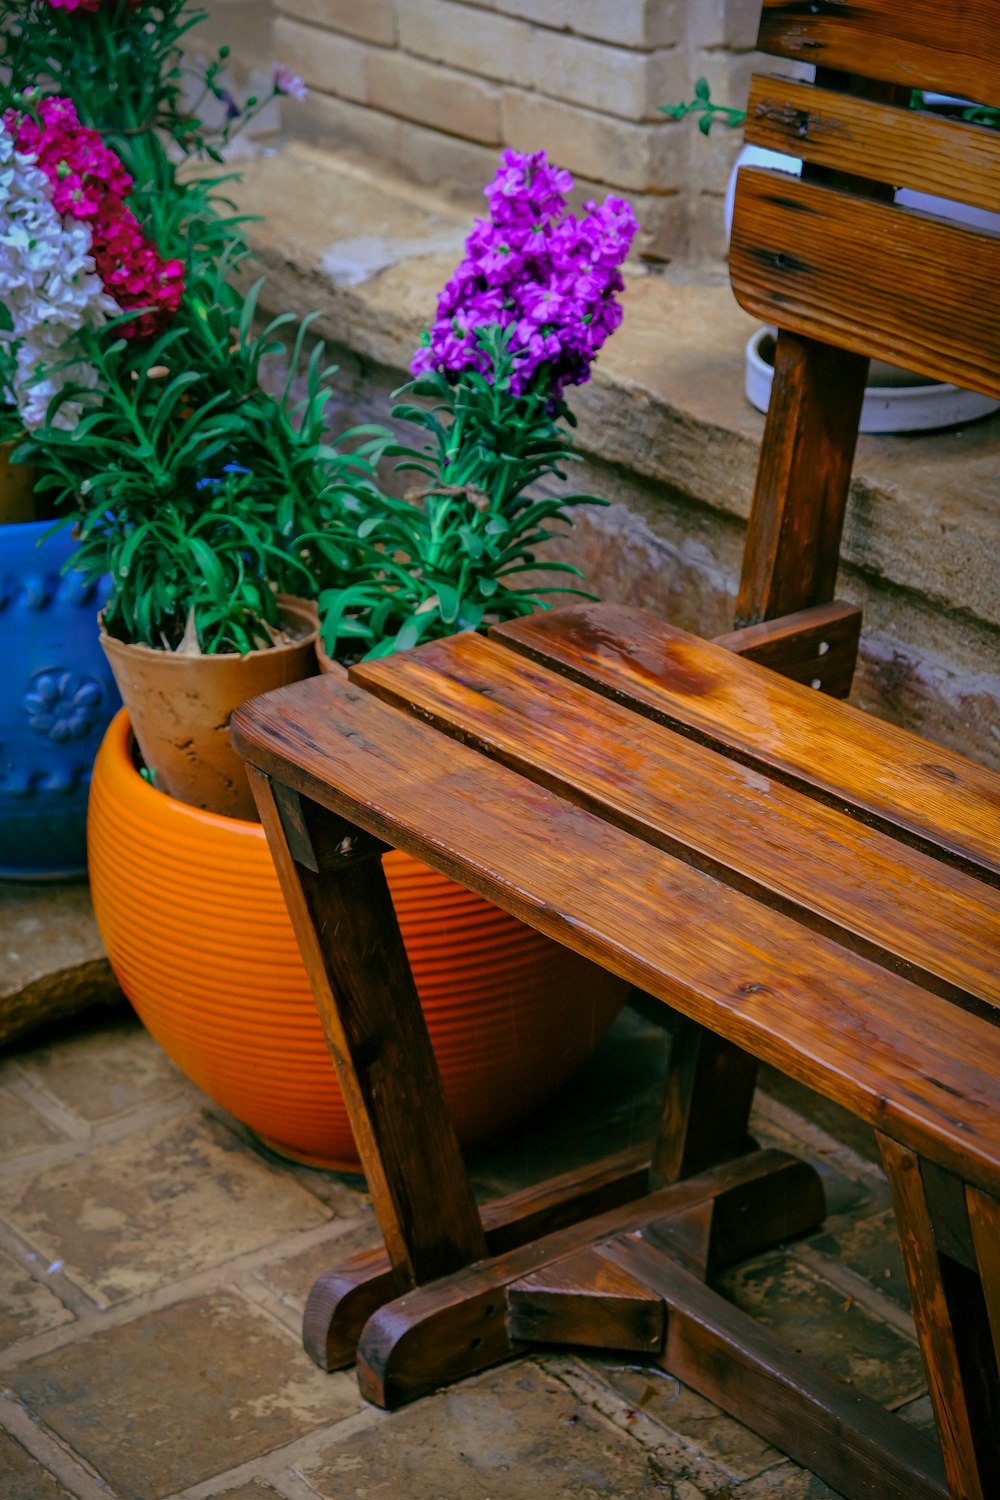 a wooden bench sitting next to a flower pot